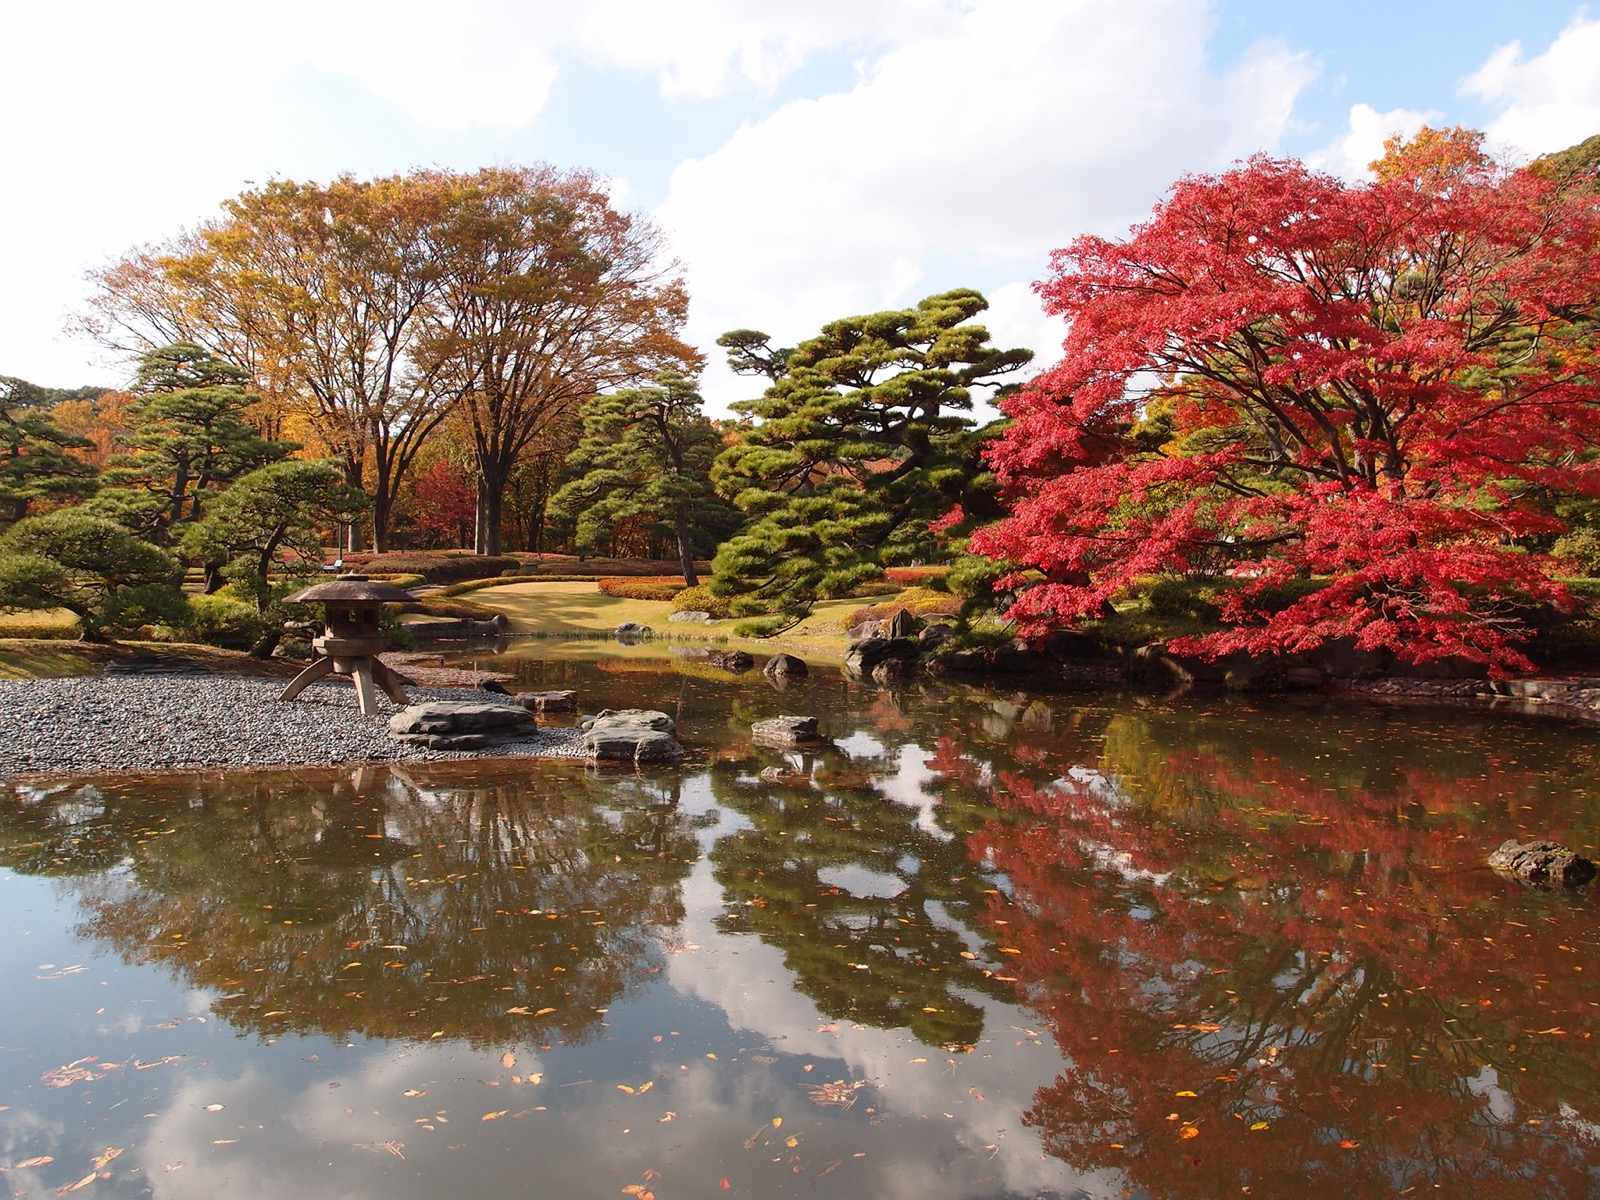 Photo of Ninomaru Garden, Japan (Imperial Palace East Garden @ Tokyo by Guilhem Vellut)